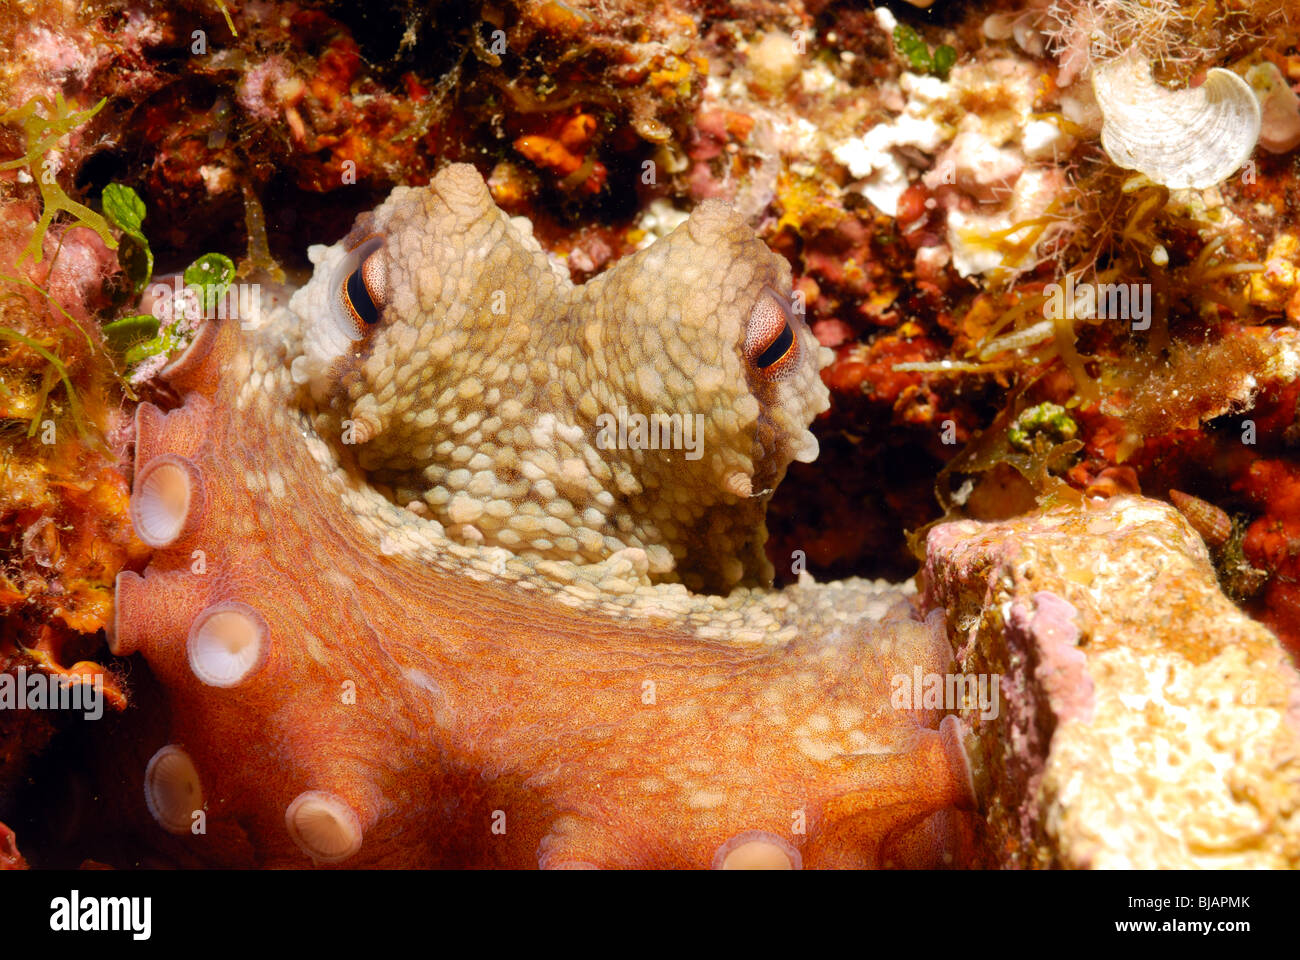 Common octopus hiding in a hole Mediterranean Sea Stock Photo